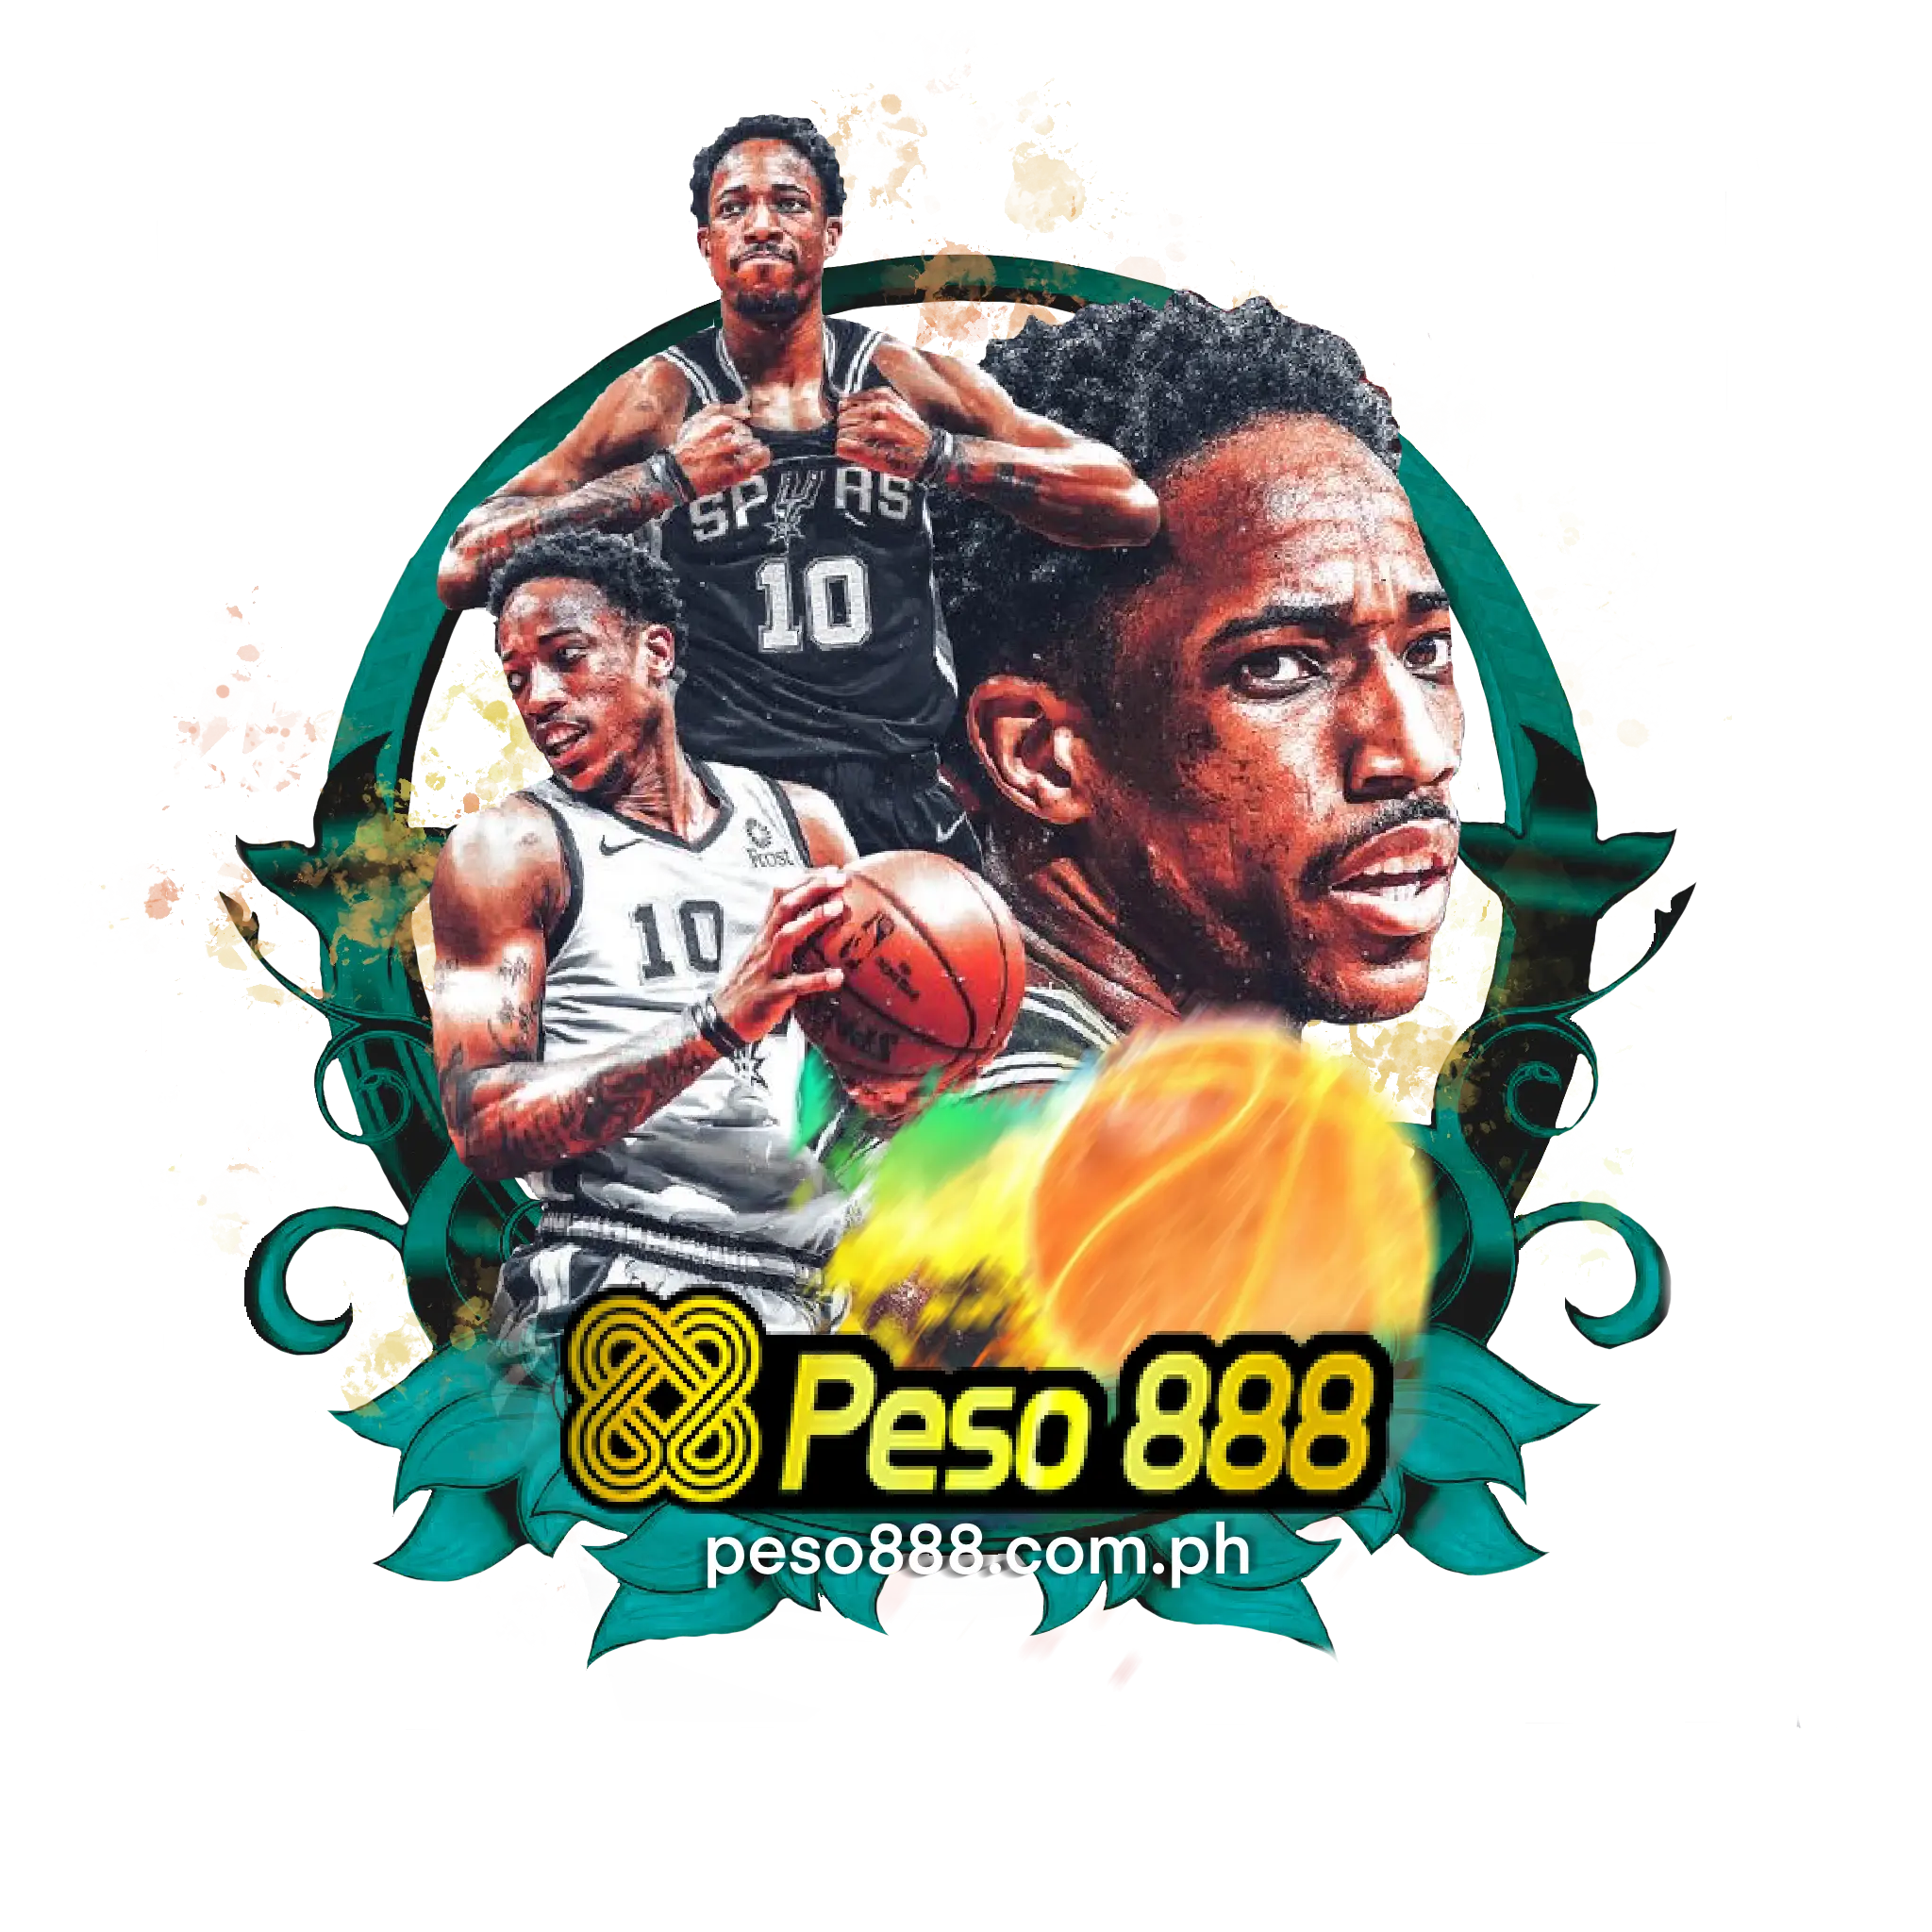 Peso888 Online Casino Sports